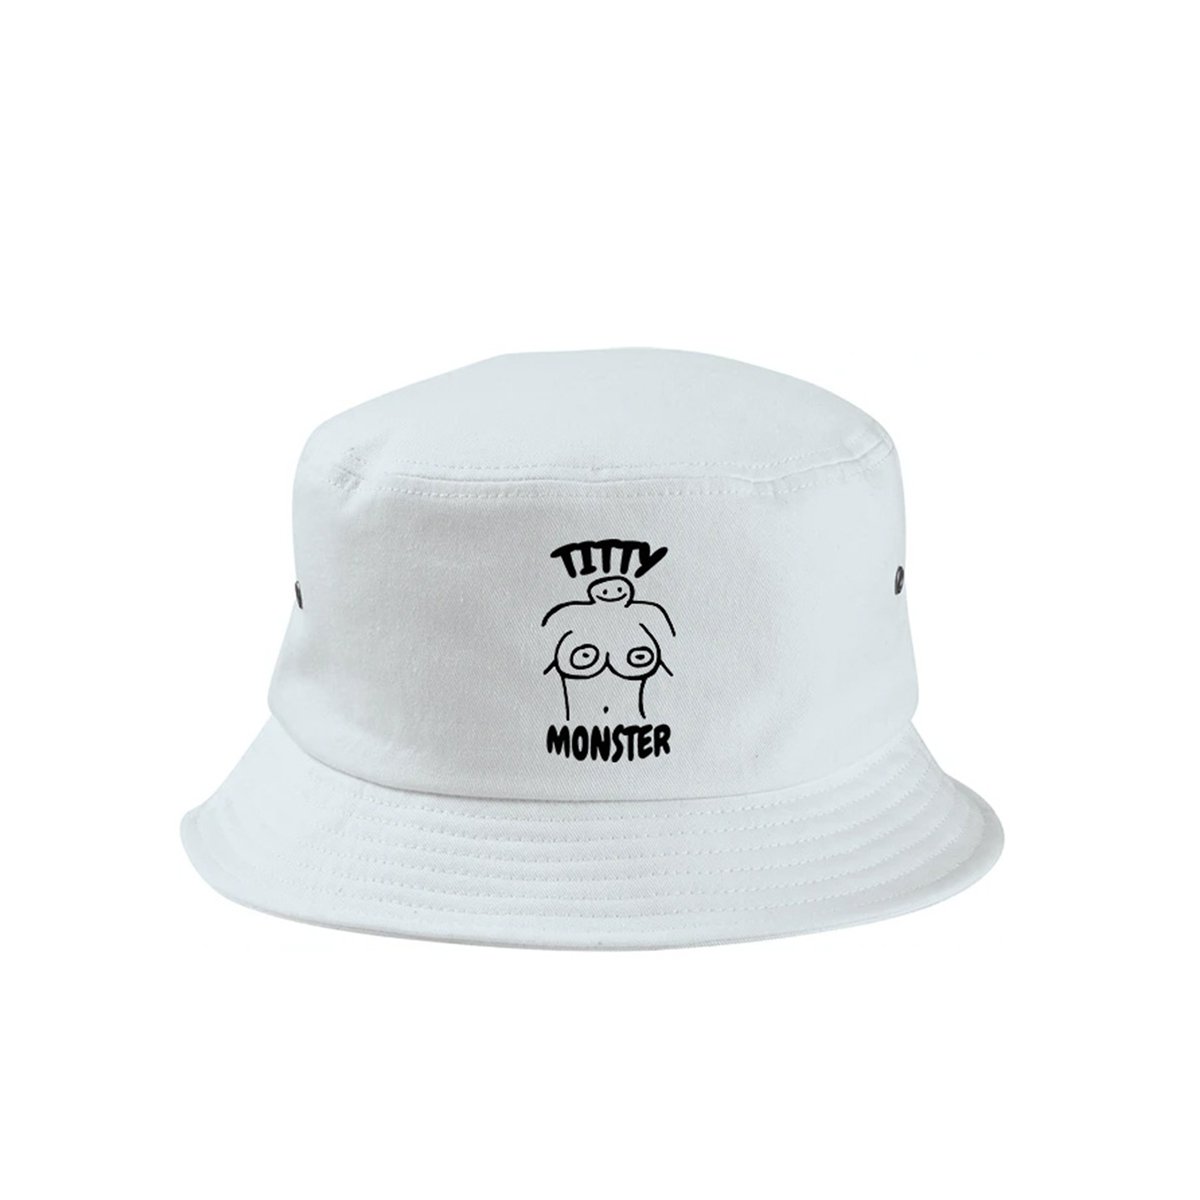 WHITE TITTY MONSTER BUCKET HAT | TittyMonsterInc